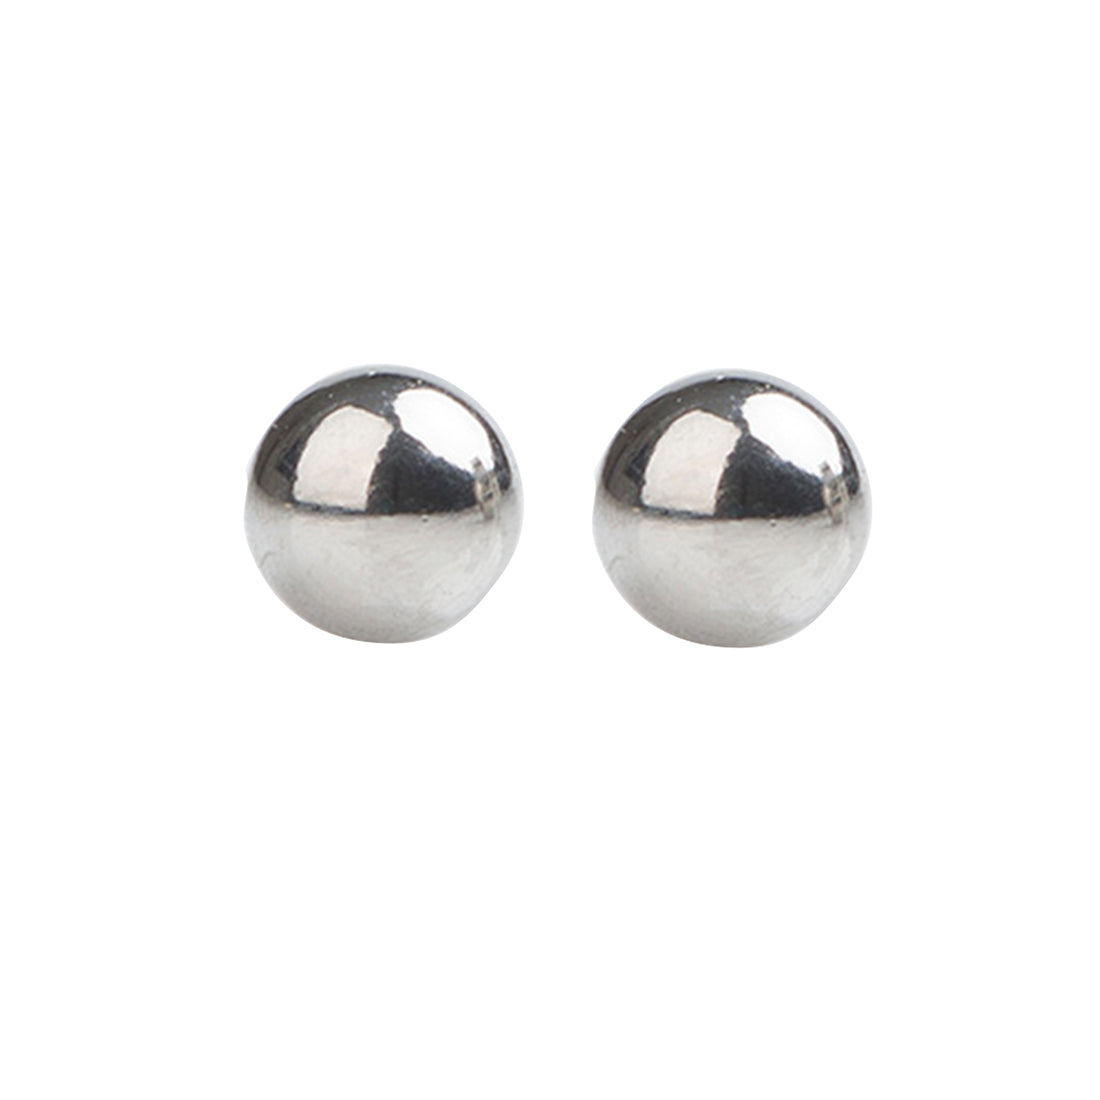 4MM Ball Allergy Free Stainless Steel Piercing Ear Stud